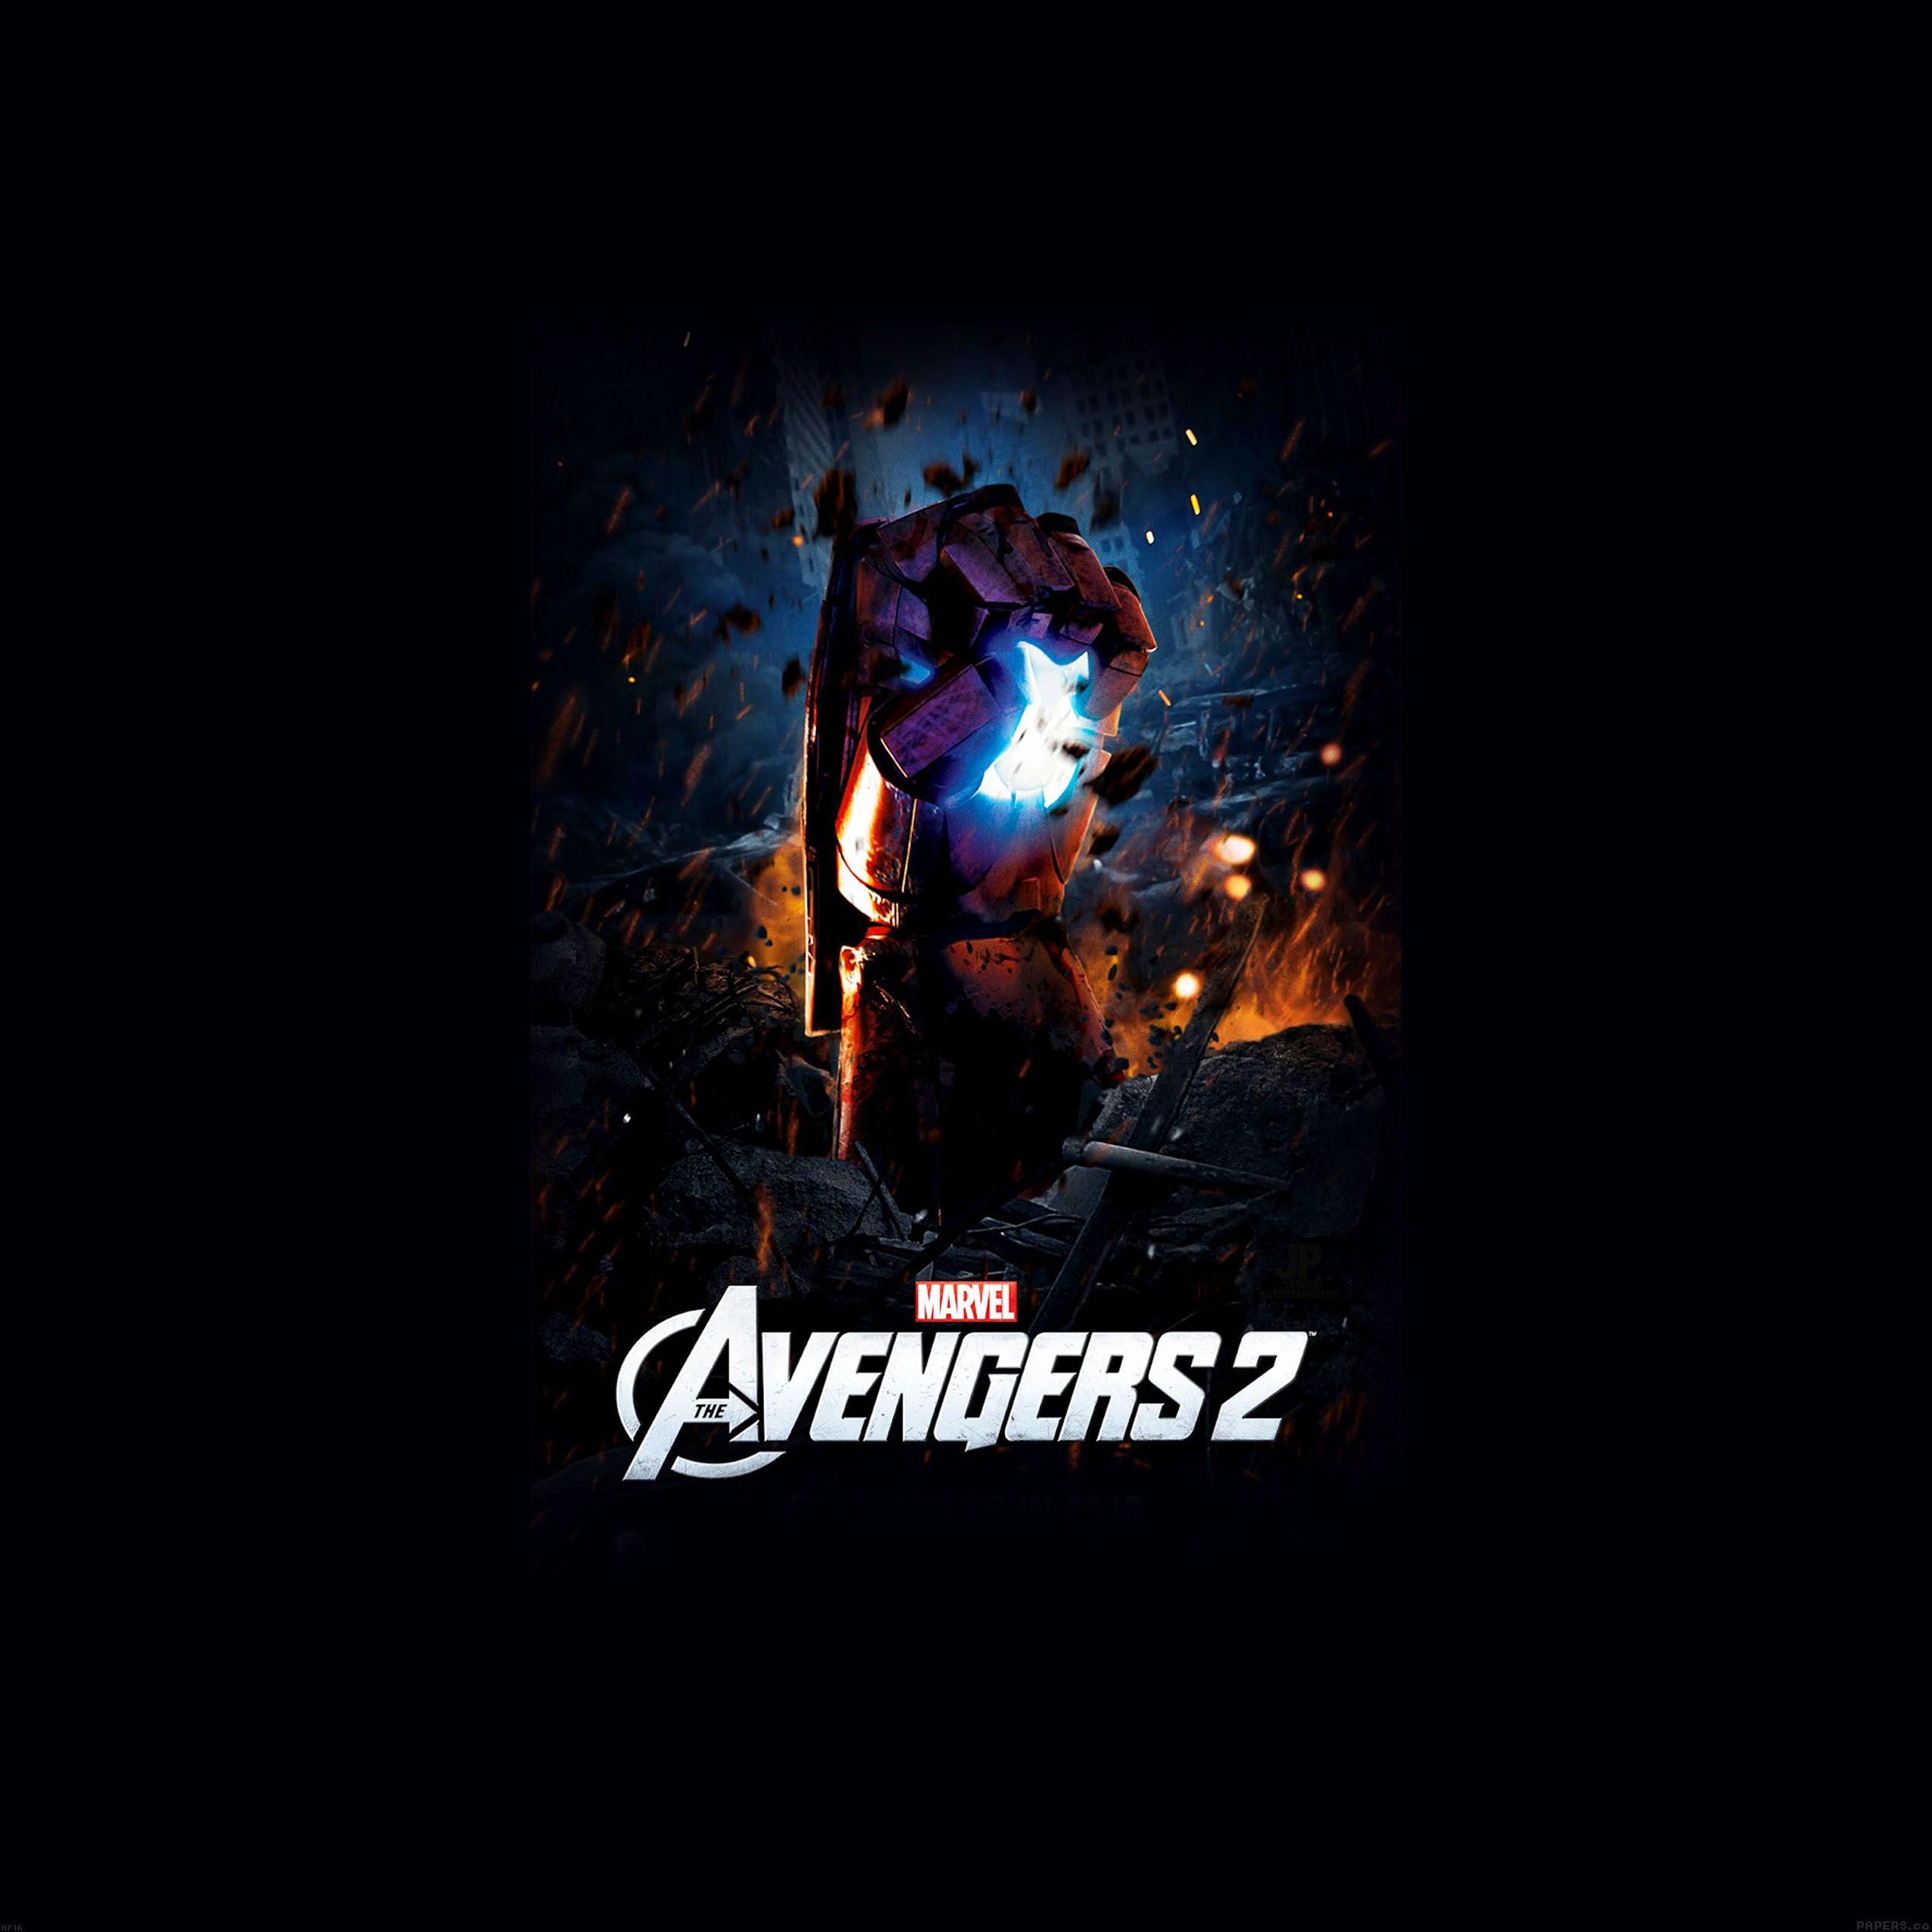 Avengers wallpaper for iPhone, iPad and desktop